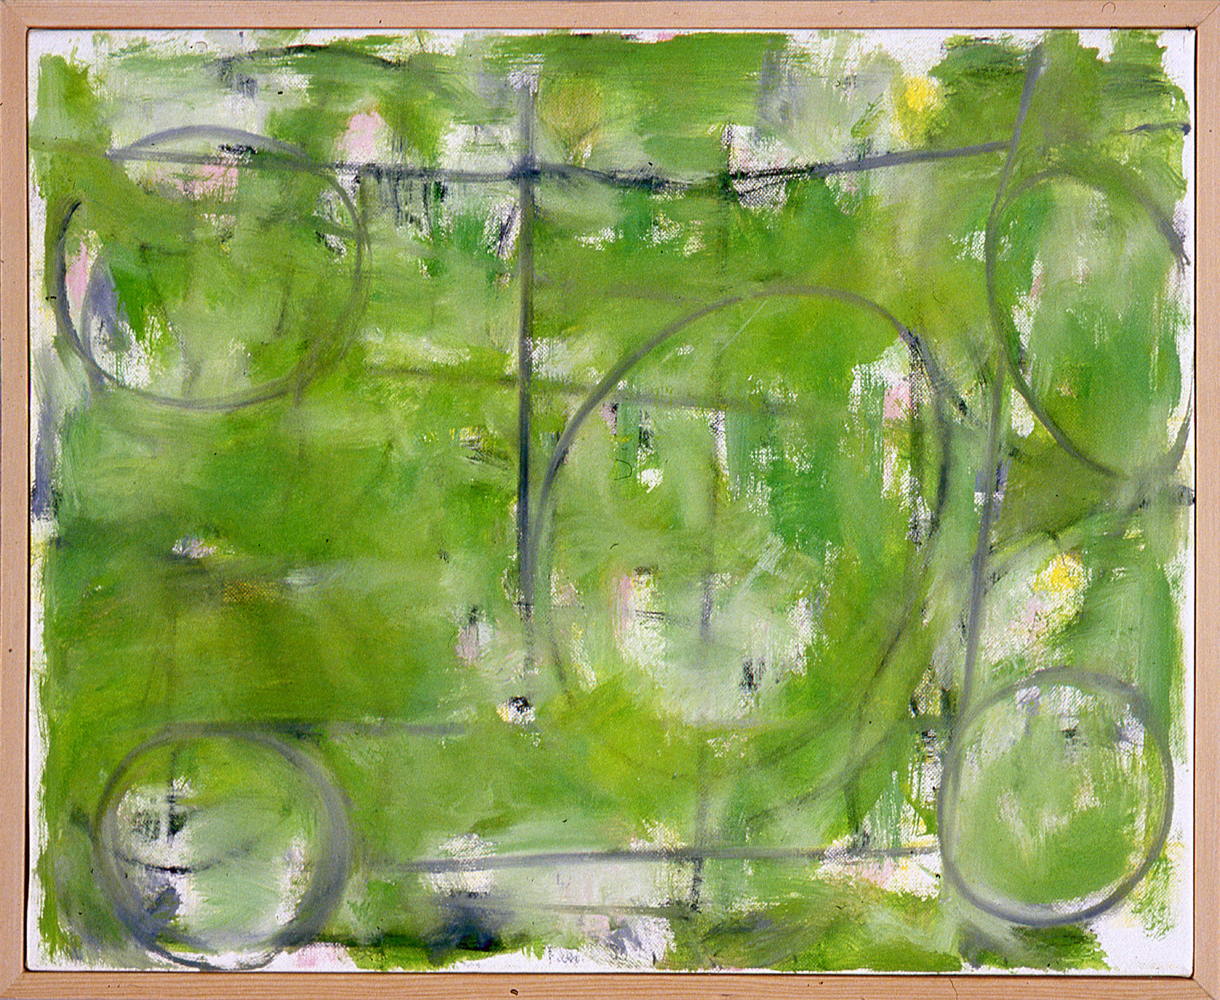 Robert C. Jones, Orchard, 2011, oil on canvas, 16 x 20 inches, $4000.